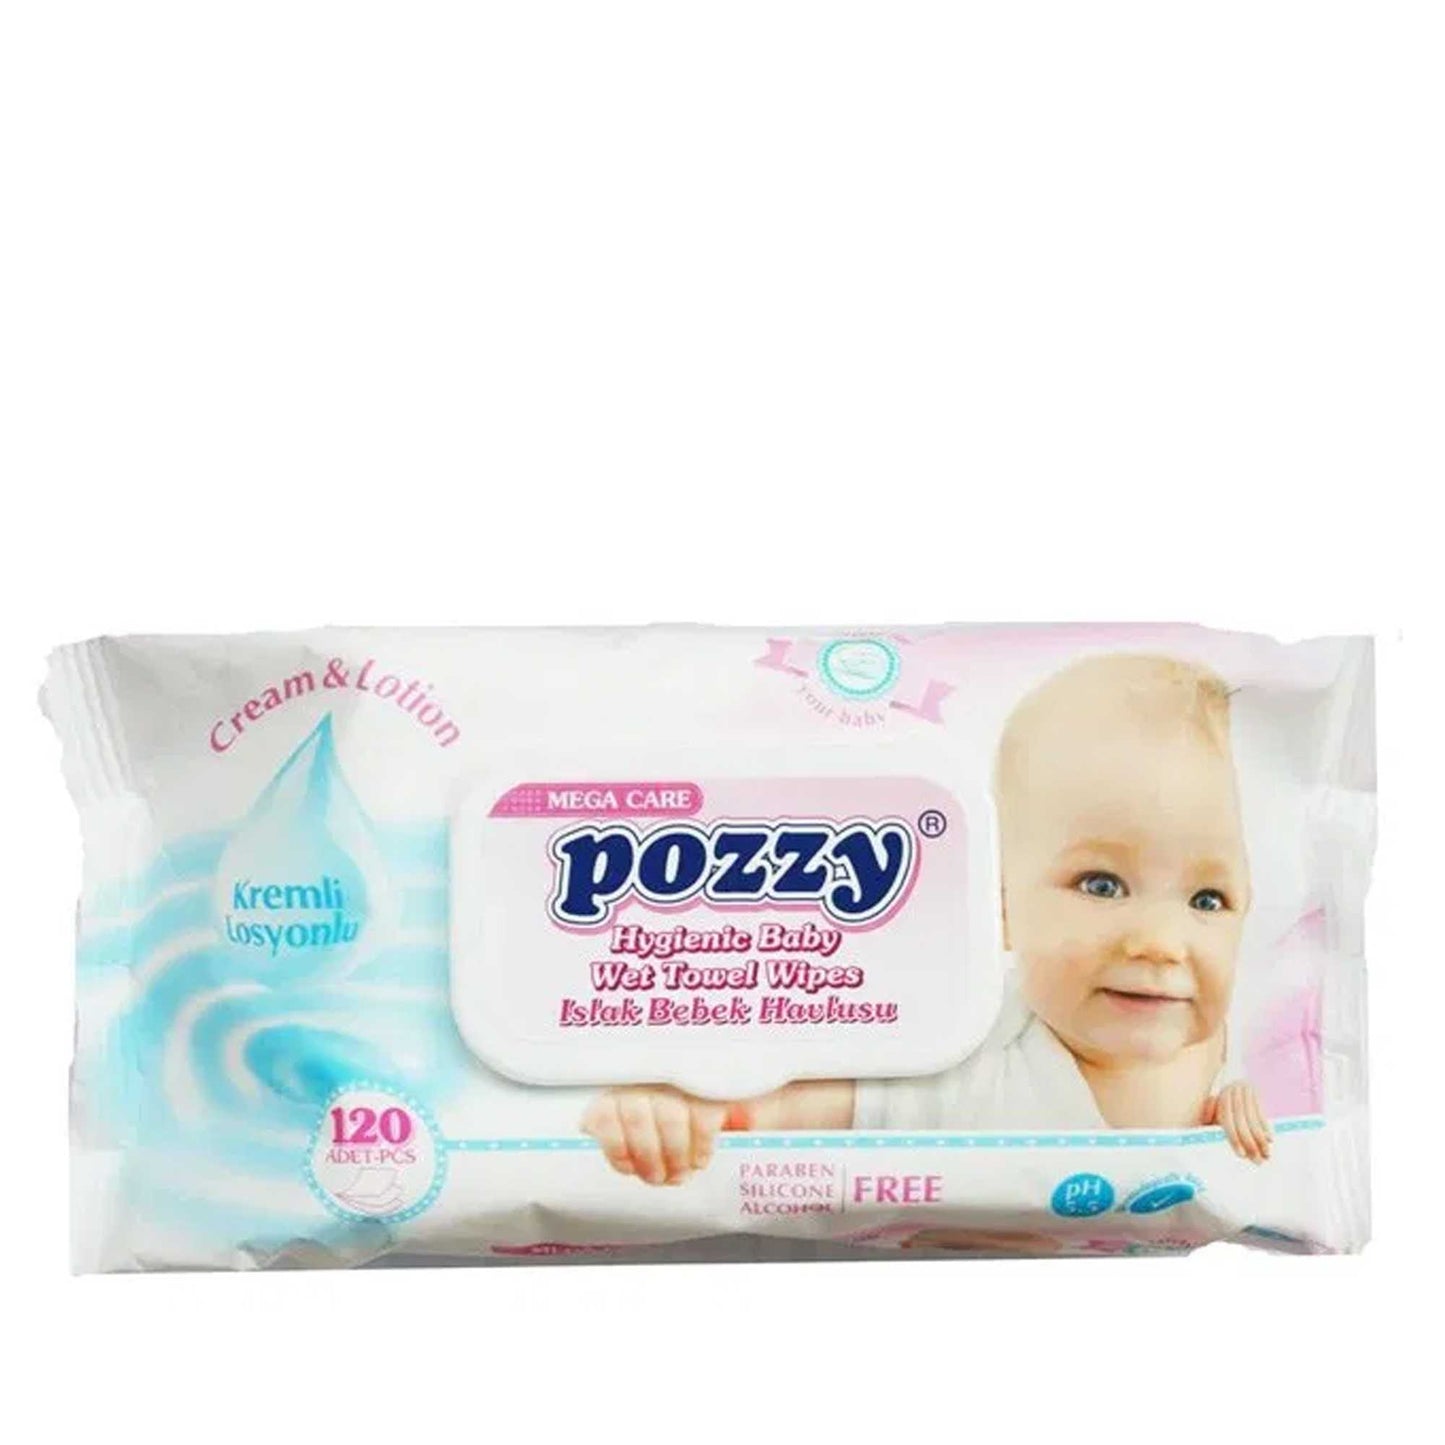 Pozzy Baby Wet Towel Wipes 120 Pcs